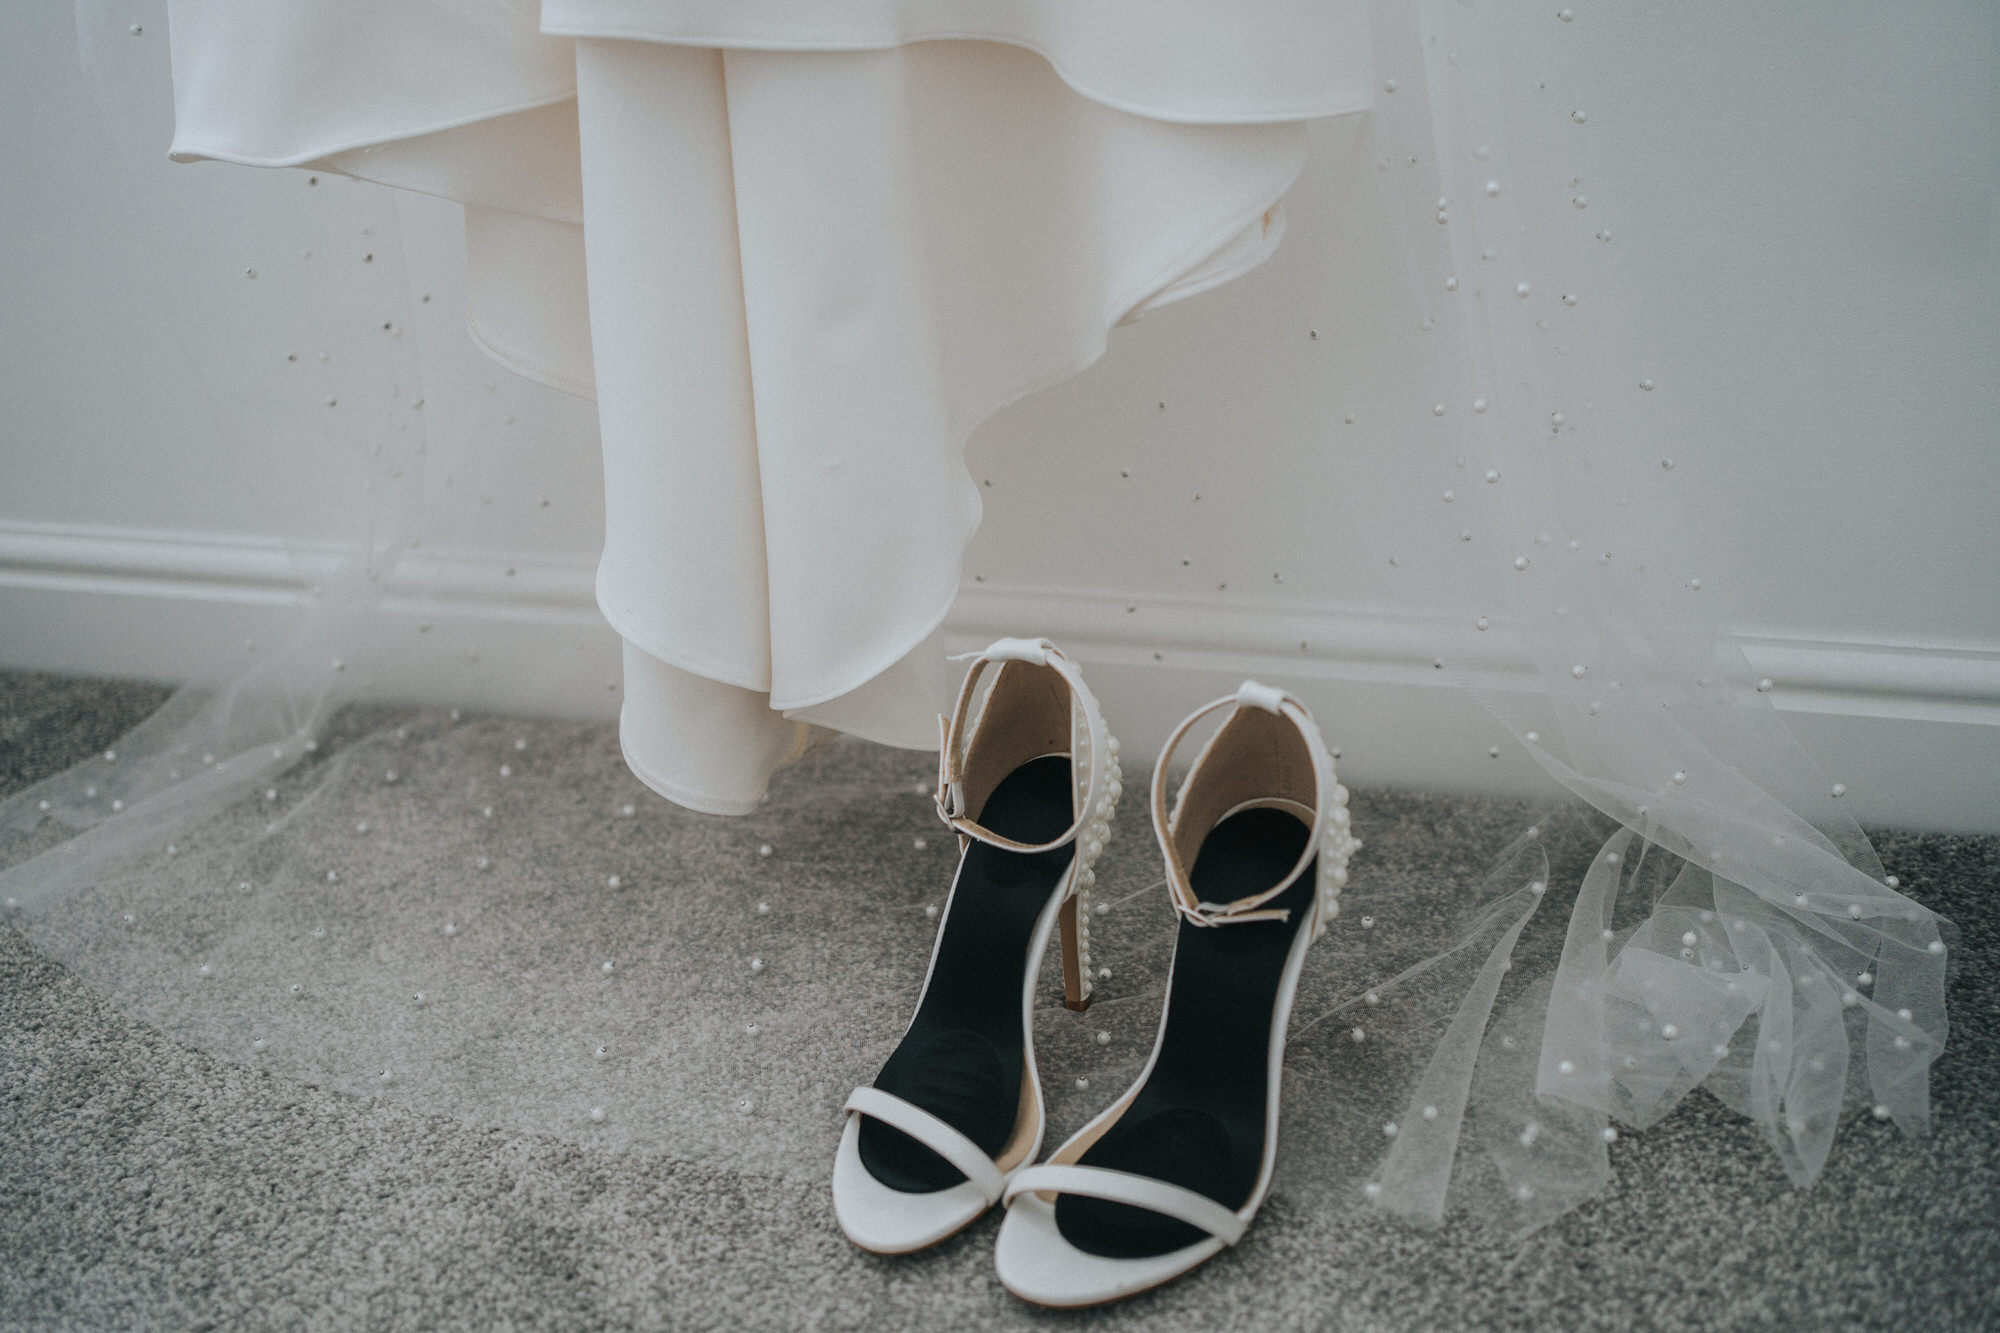 A pair of wedding shoes sit underneath a wedding dress